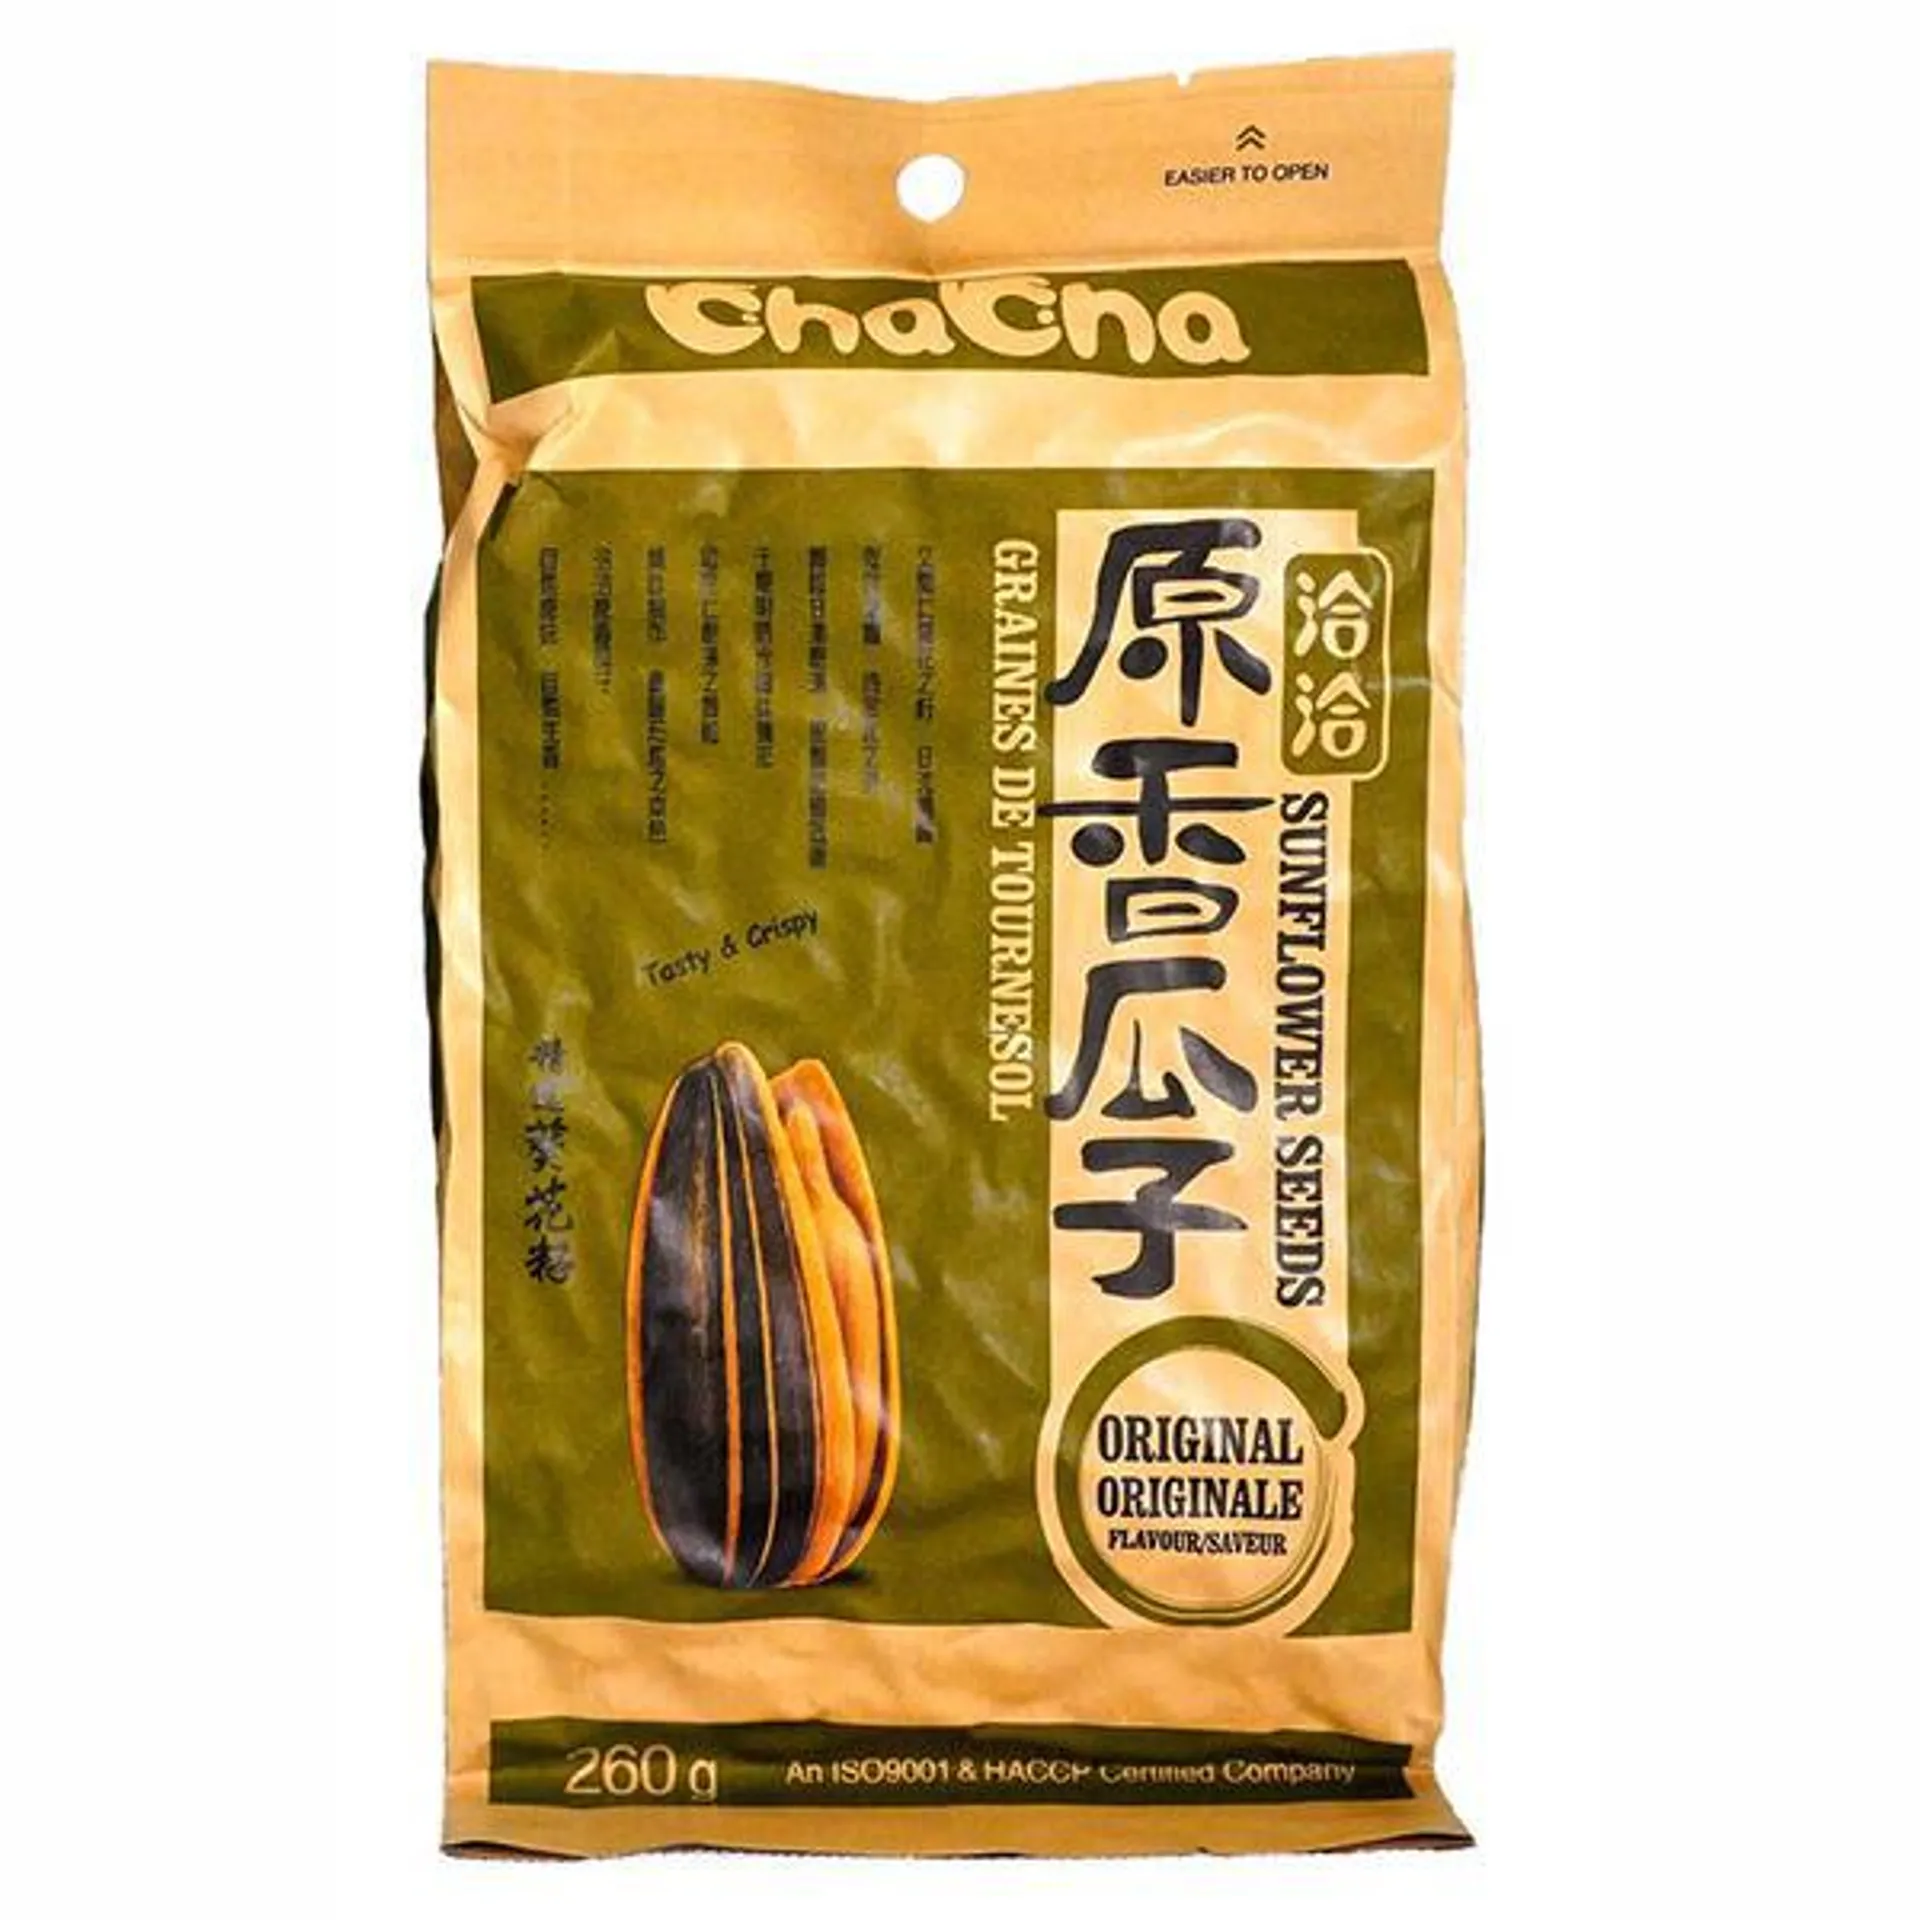 ChaCha Sunflower Seeds-Original 260g